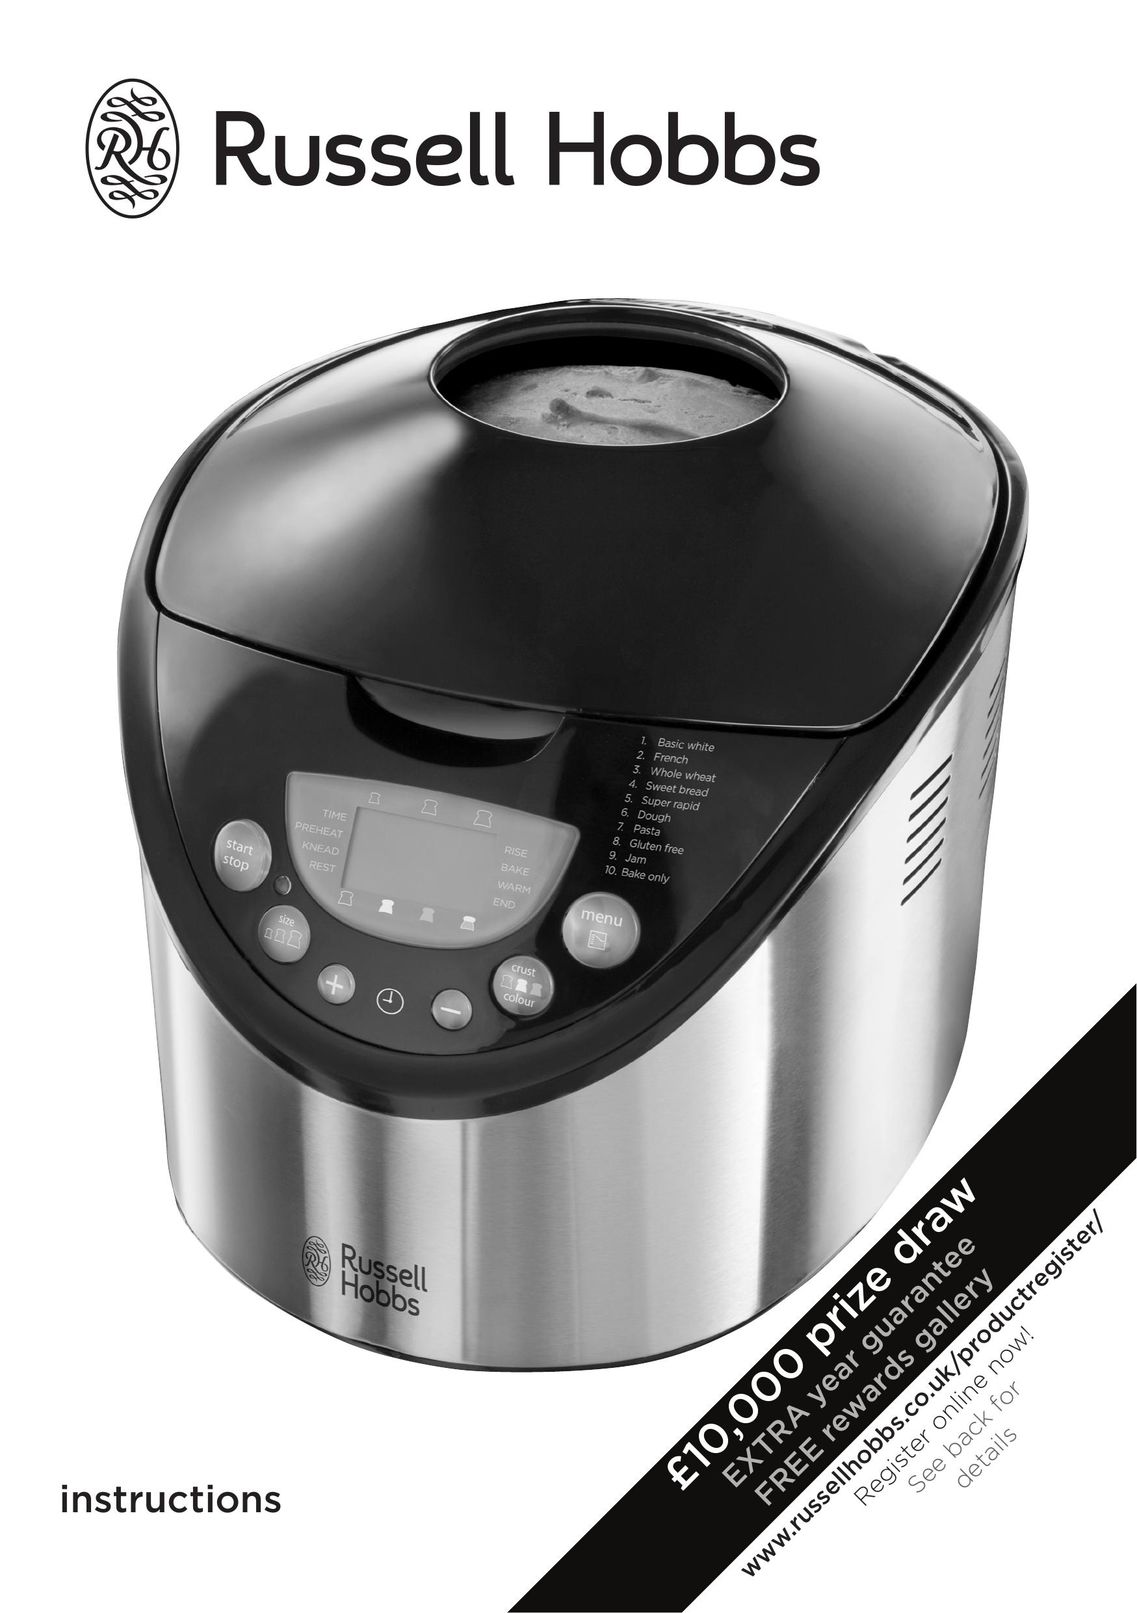 Russell Hobbs T22-5001653 Electric Pressure Cooker User Manual